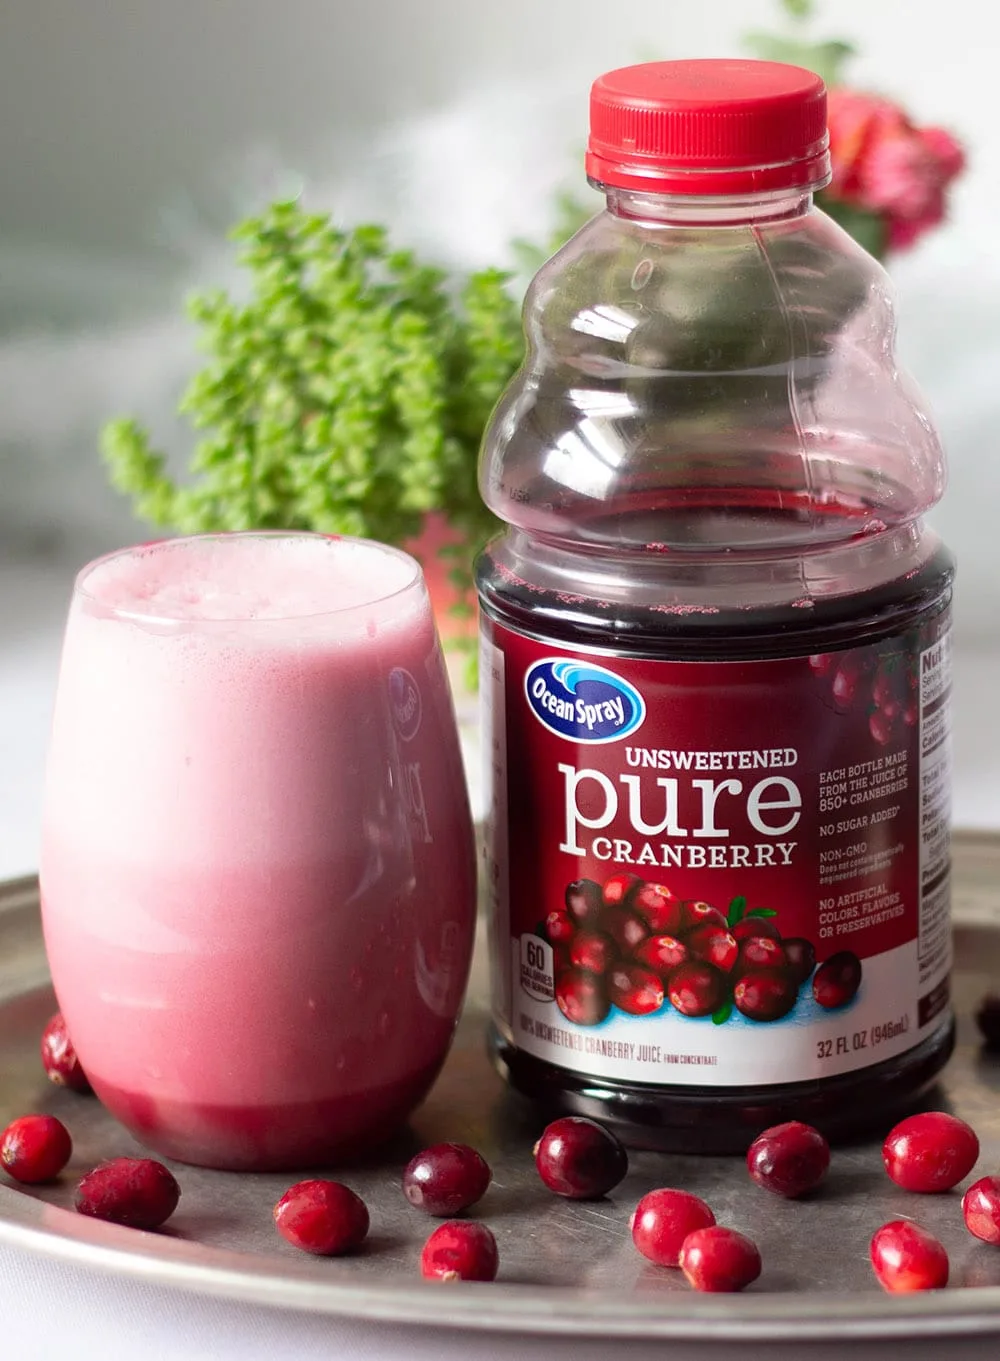 Cranberry slushy drink next to bottle.